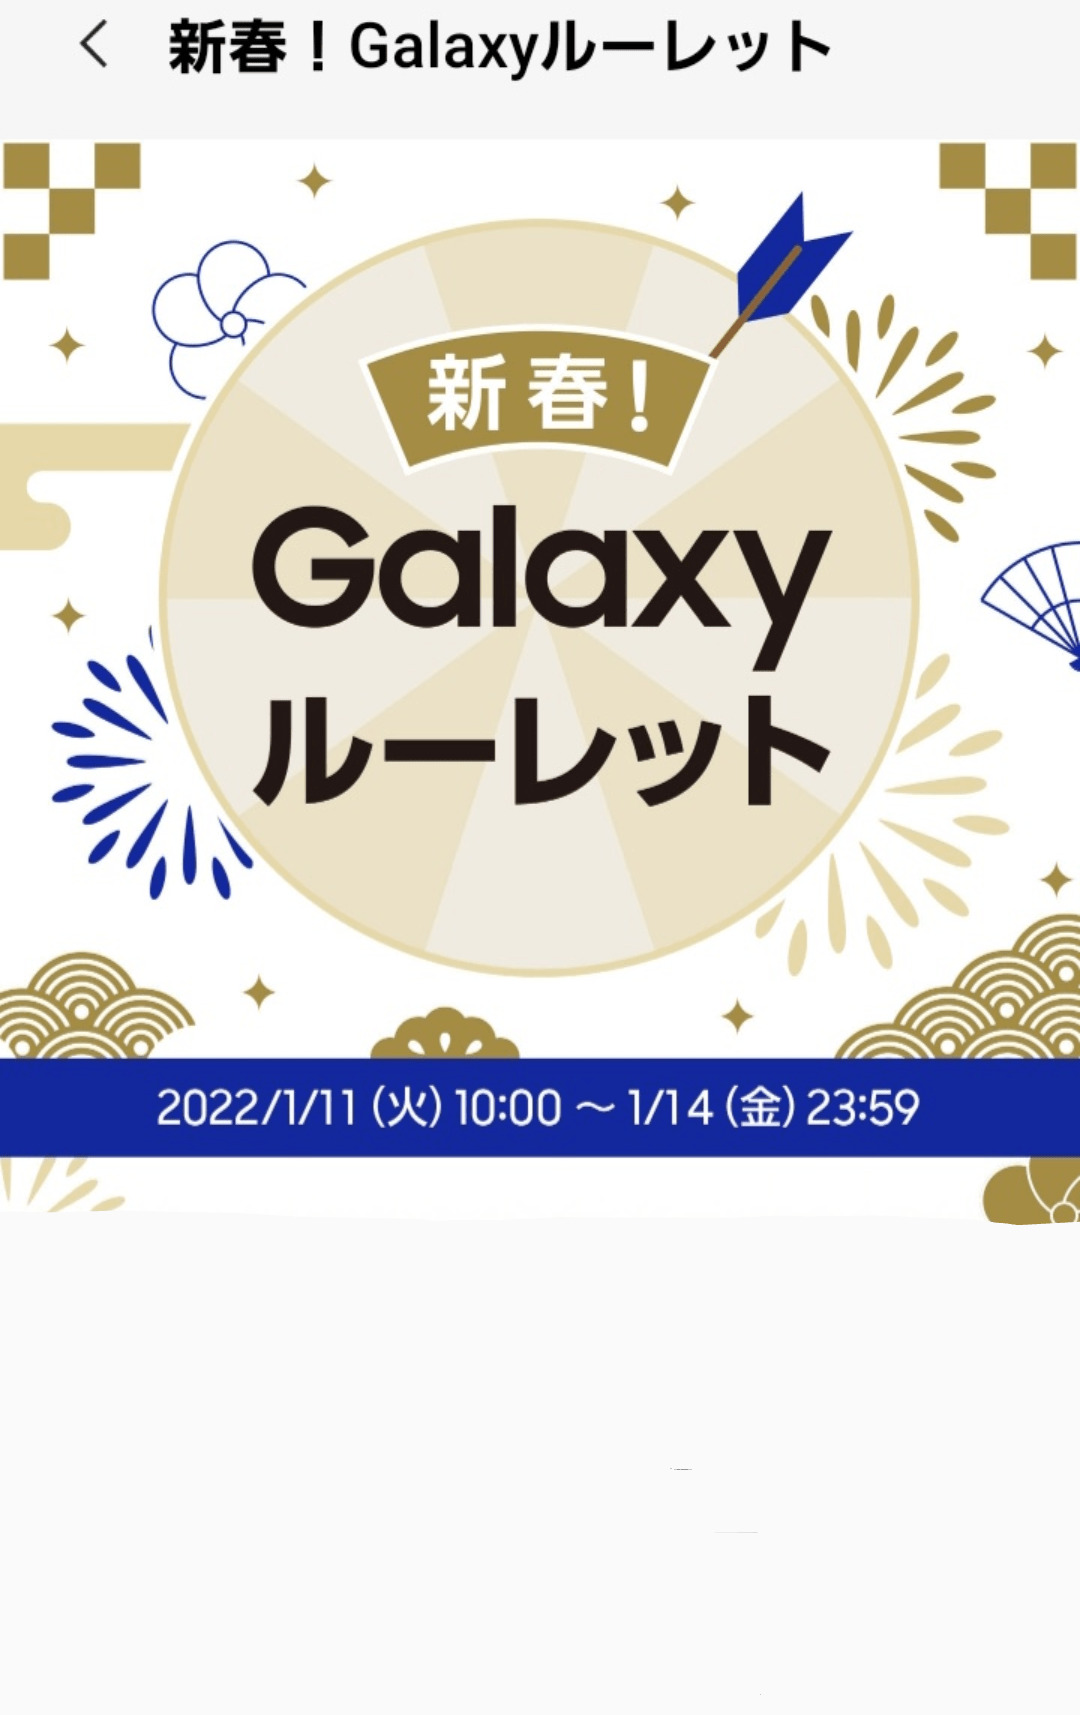 galaxy_members_5go_galaxy_campaign